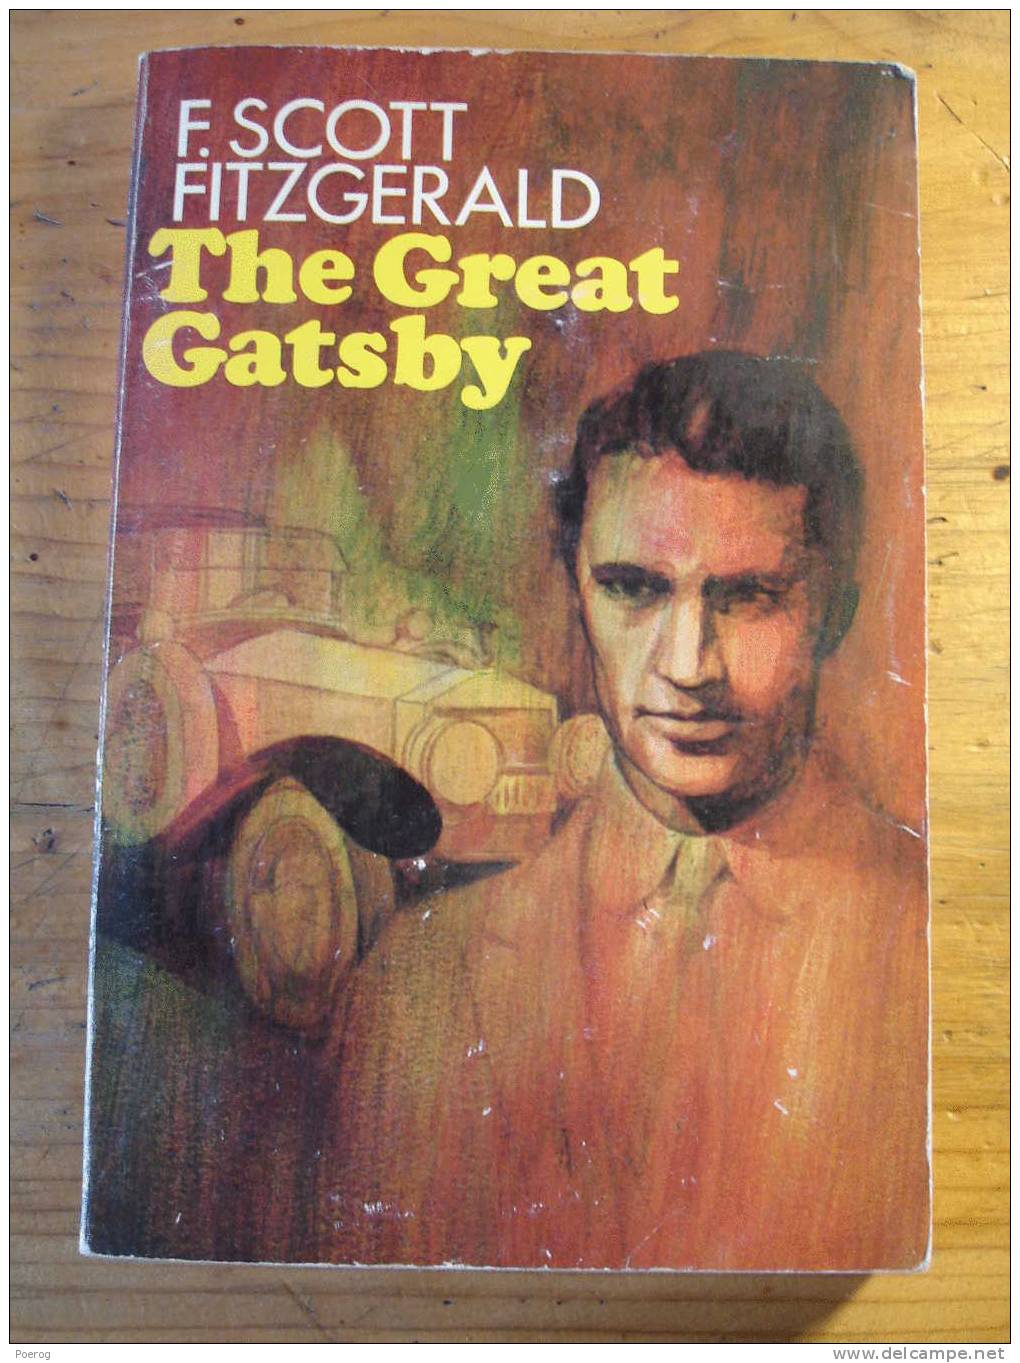 F. SCOTT FITZGERALD - THE GREAT GATSBY - SCRIBNERS LIBRARY CLASSICS N° SL1 - Gatsby Le Magnifique Livre En Anglais - Classiques